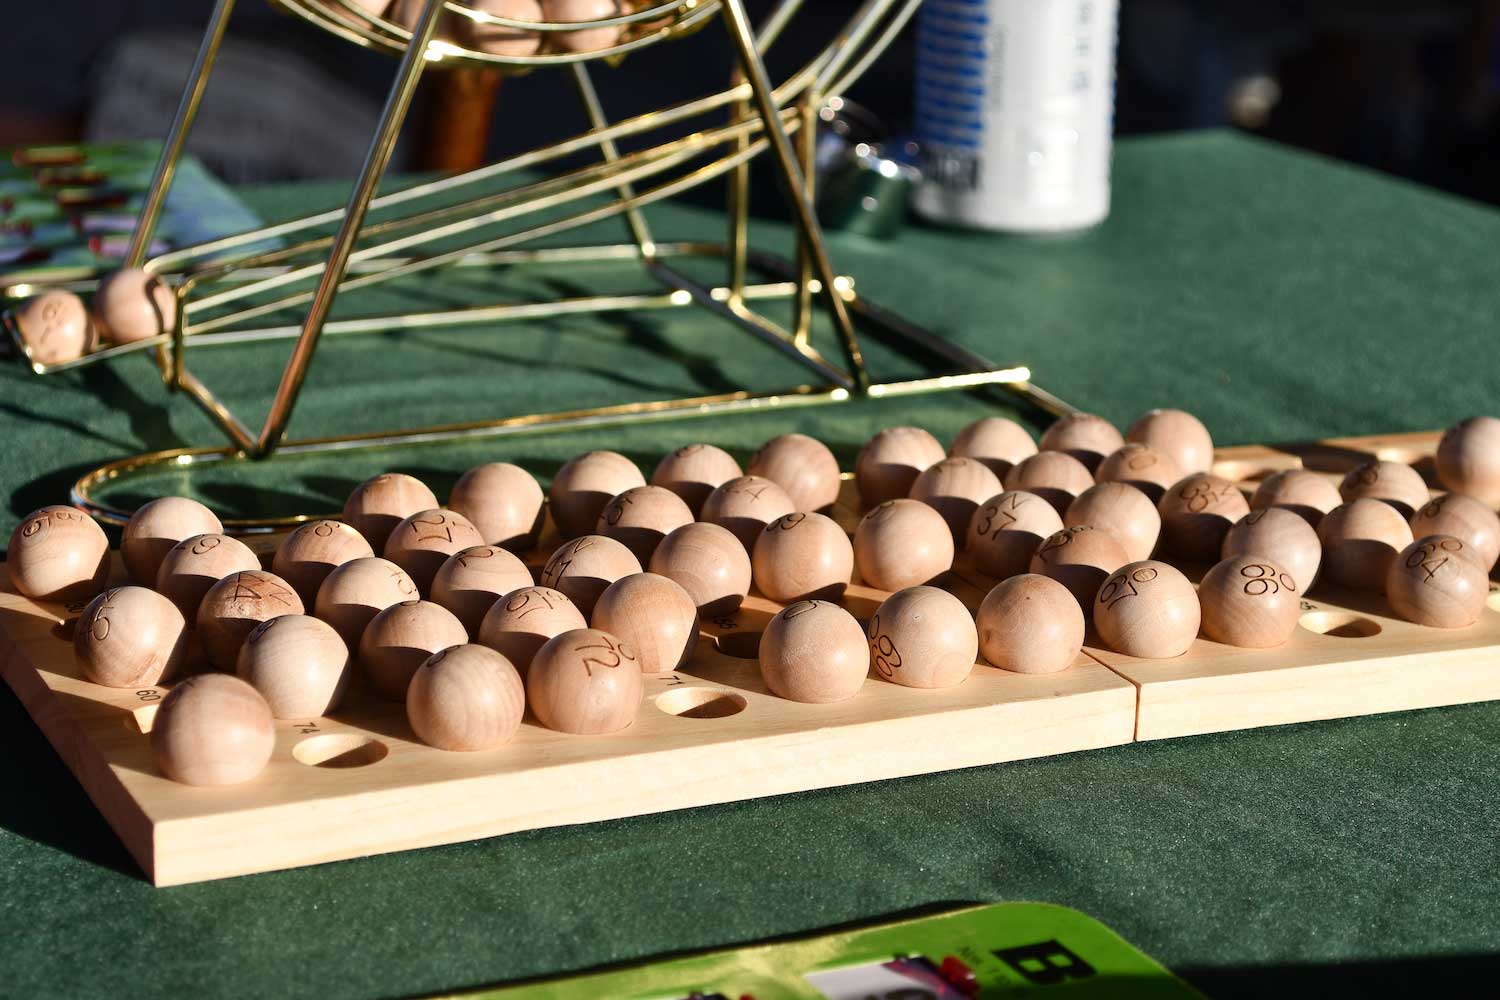 Wooden bingo balls and a bingo ball holder on a table.